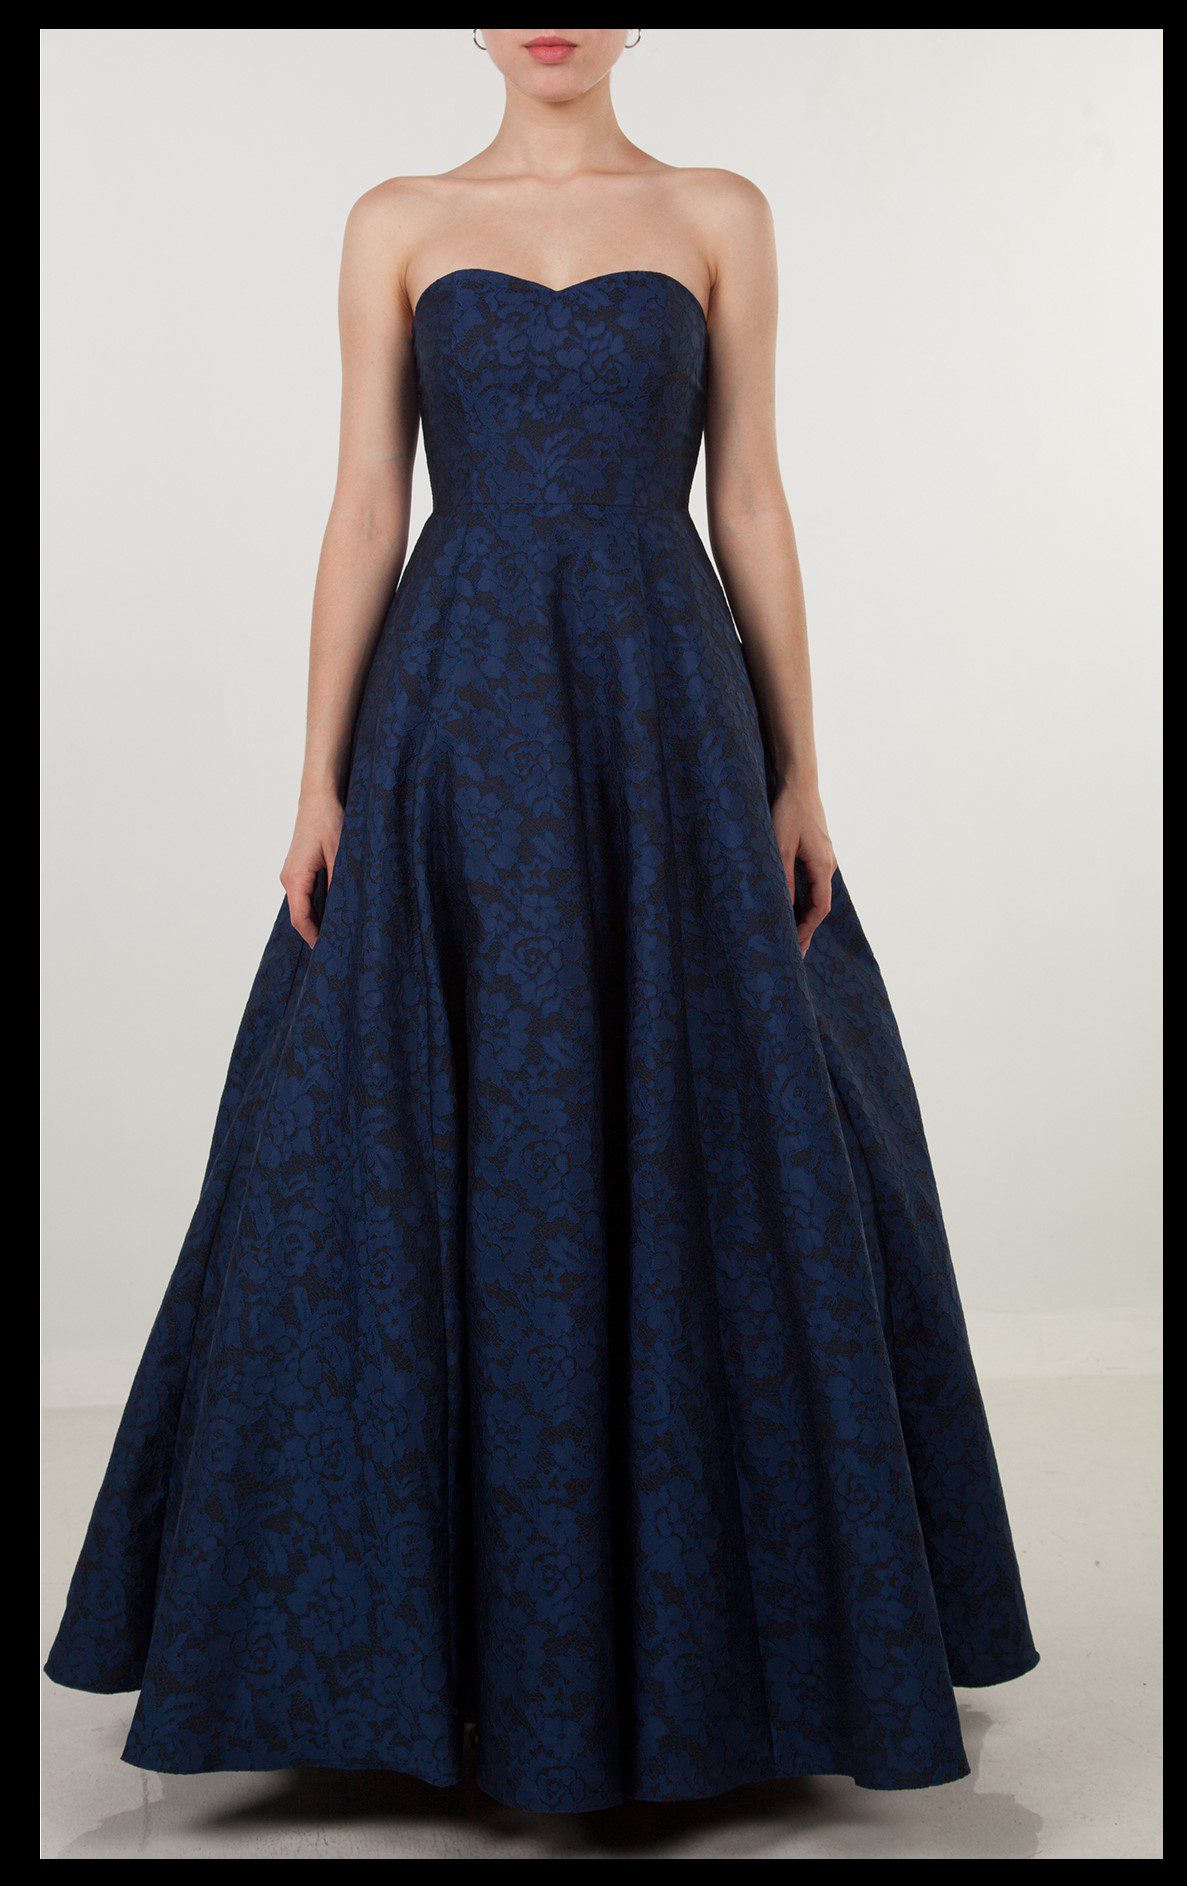 Lace Princess Formal Dress - Dresses Direct